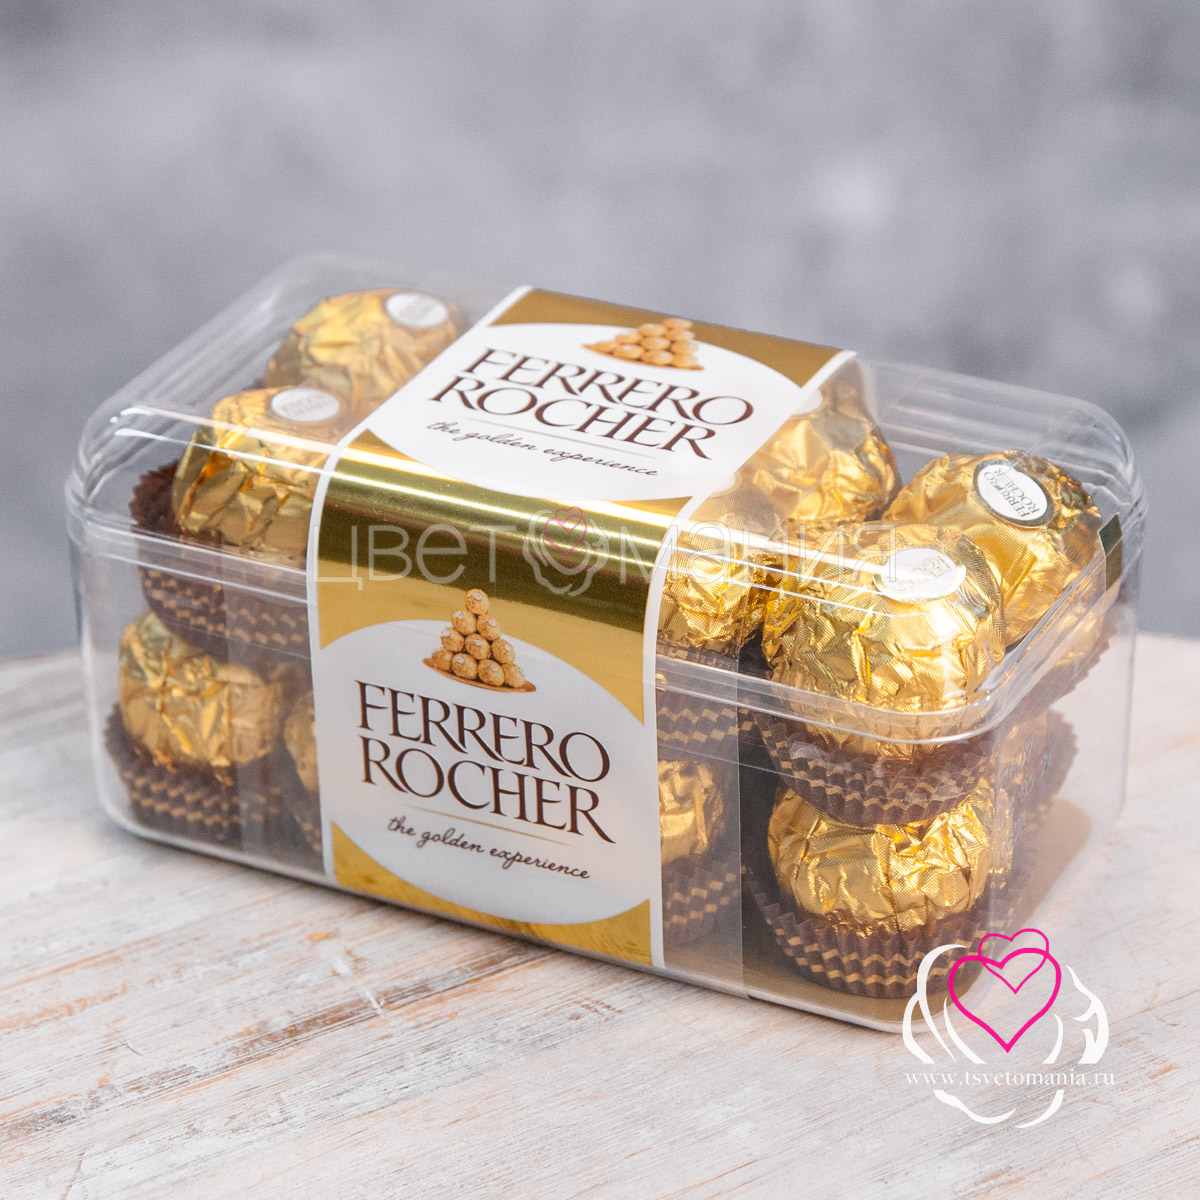 Ferrero rocher конфеты 200 г конфеты бонжур 200 г конти